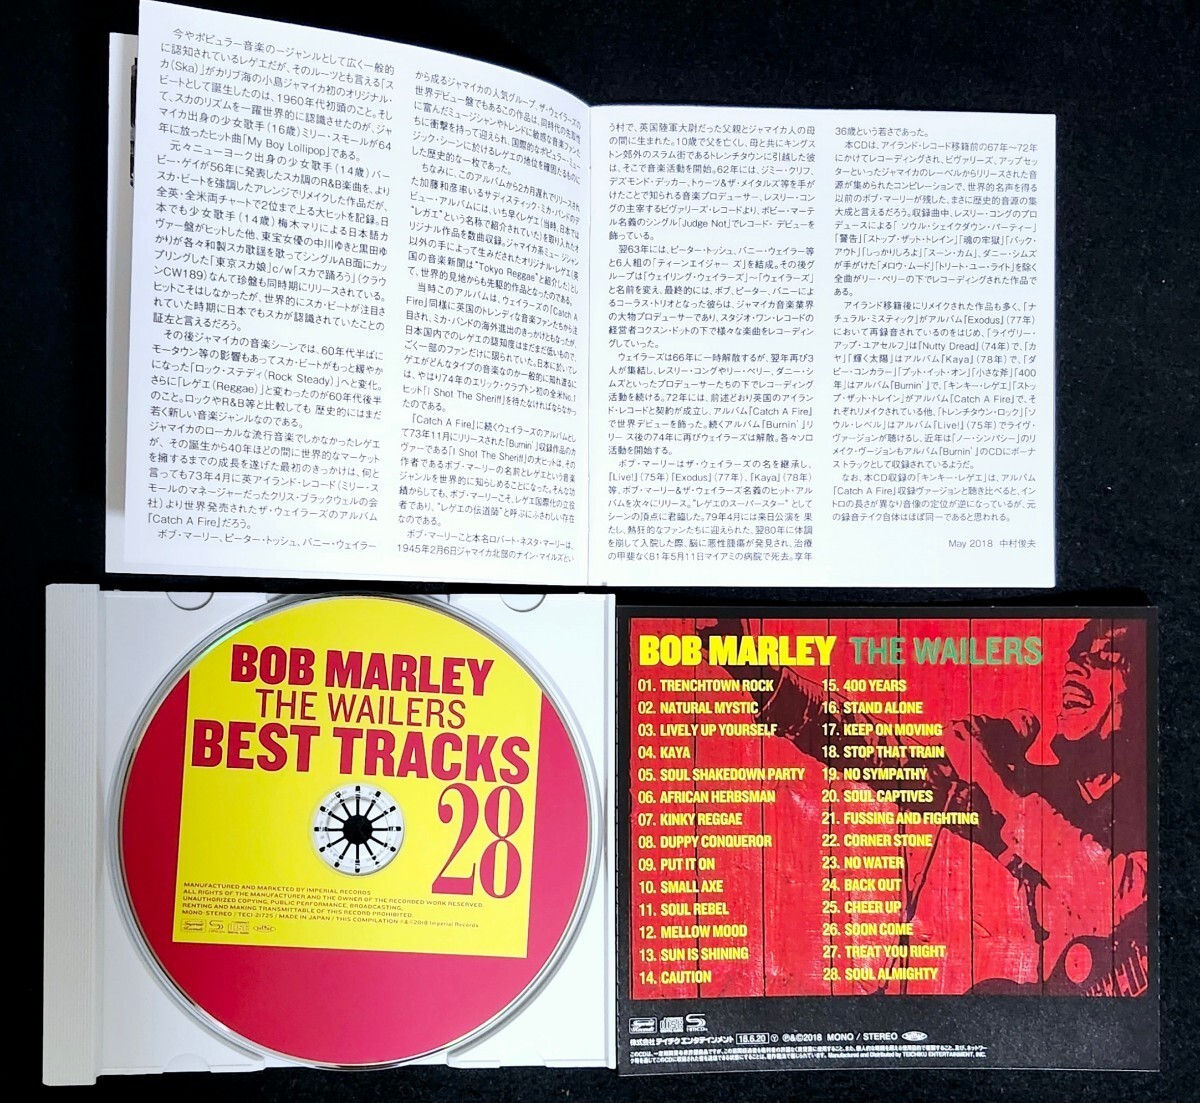 Bob Marley & The Wailers Best Tracks 28 国内盤 SHM-CD仕様 ボブマーリー ピータートッシュ レフリーコング ジャマイカ レゲエ コンピの画像2